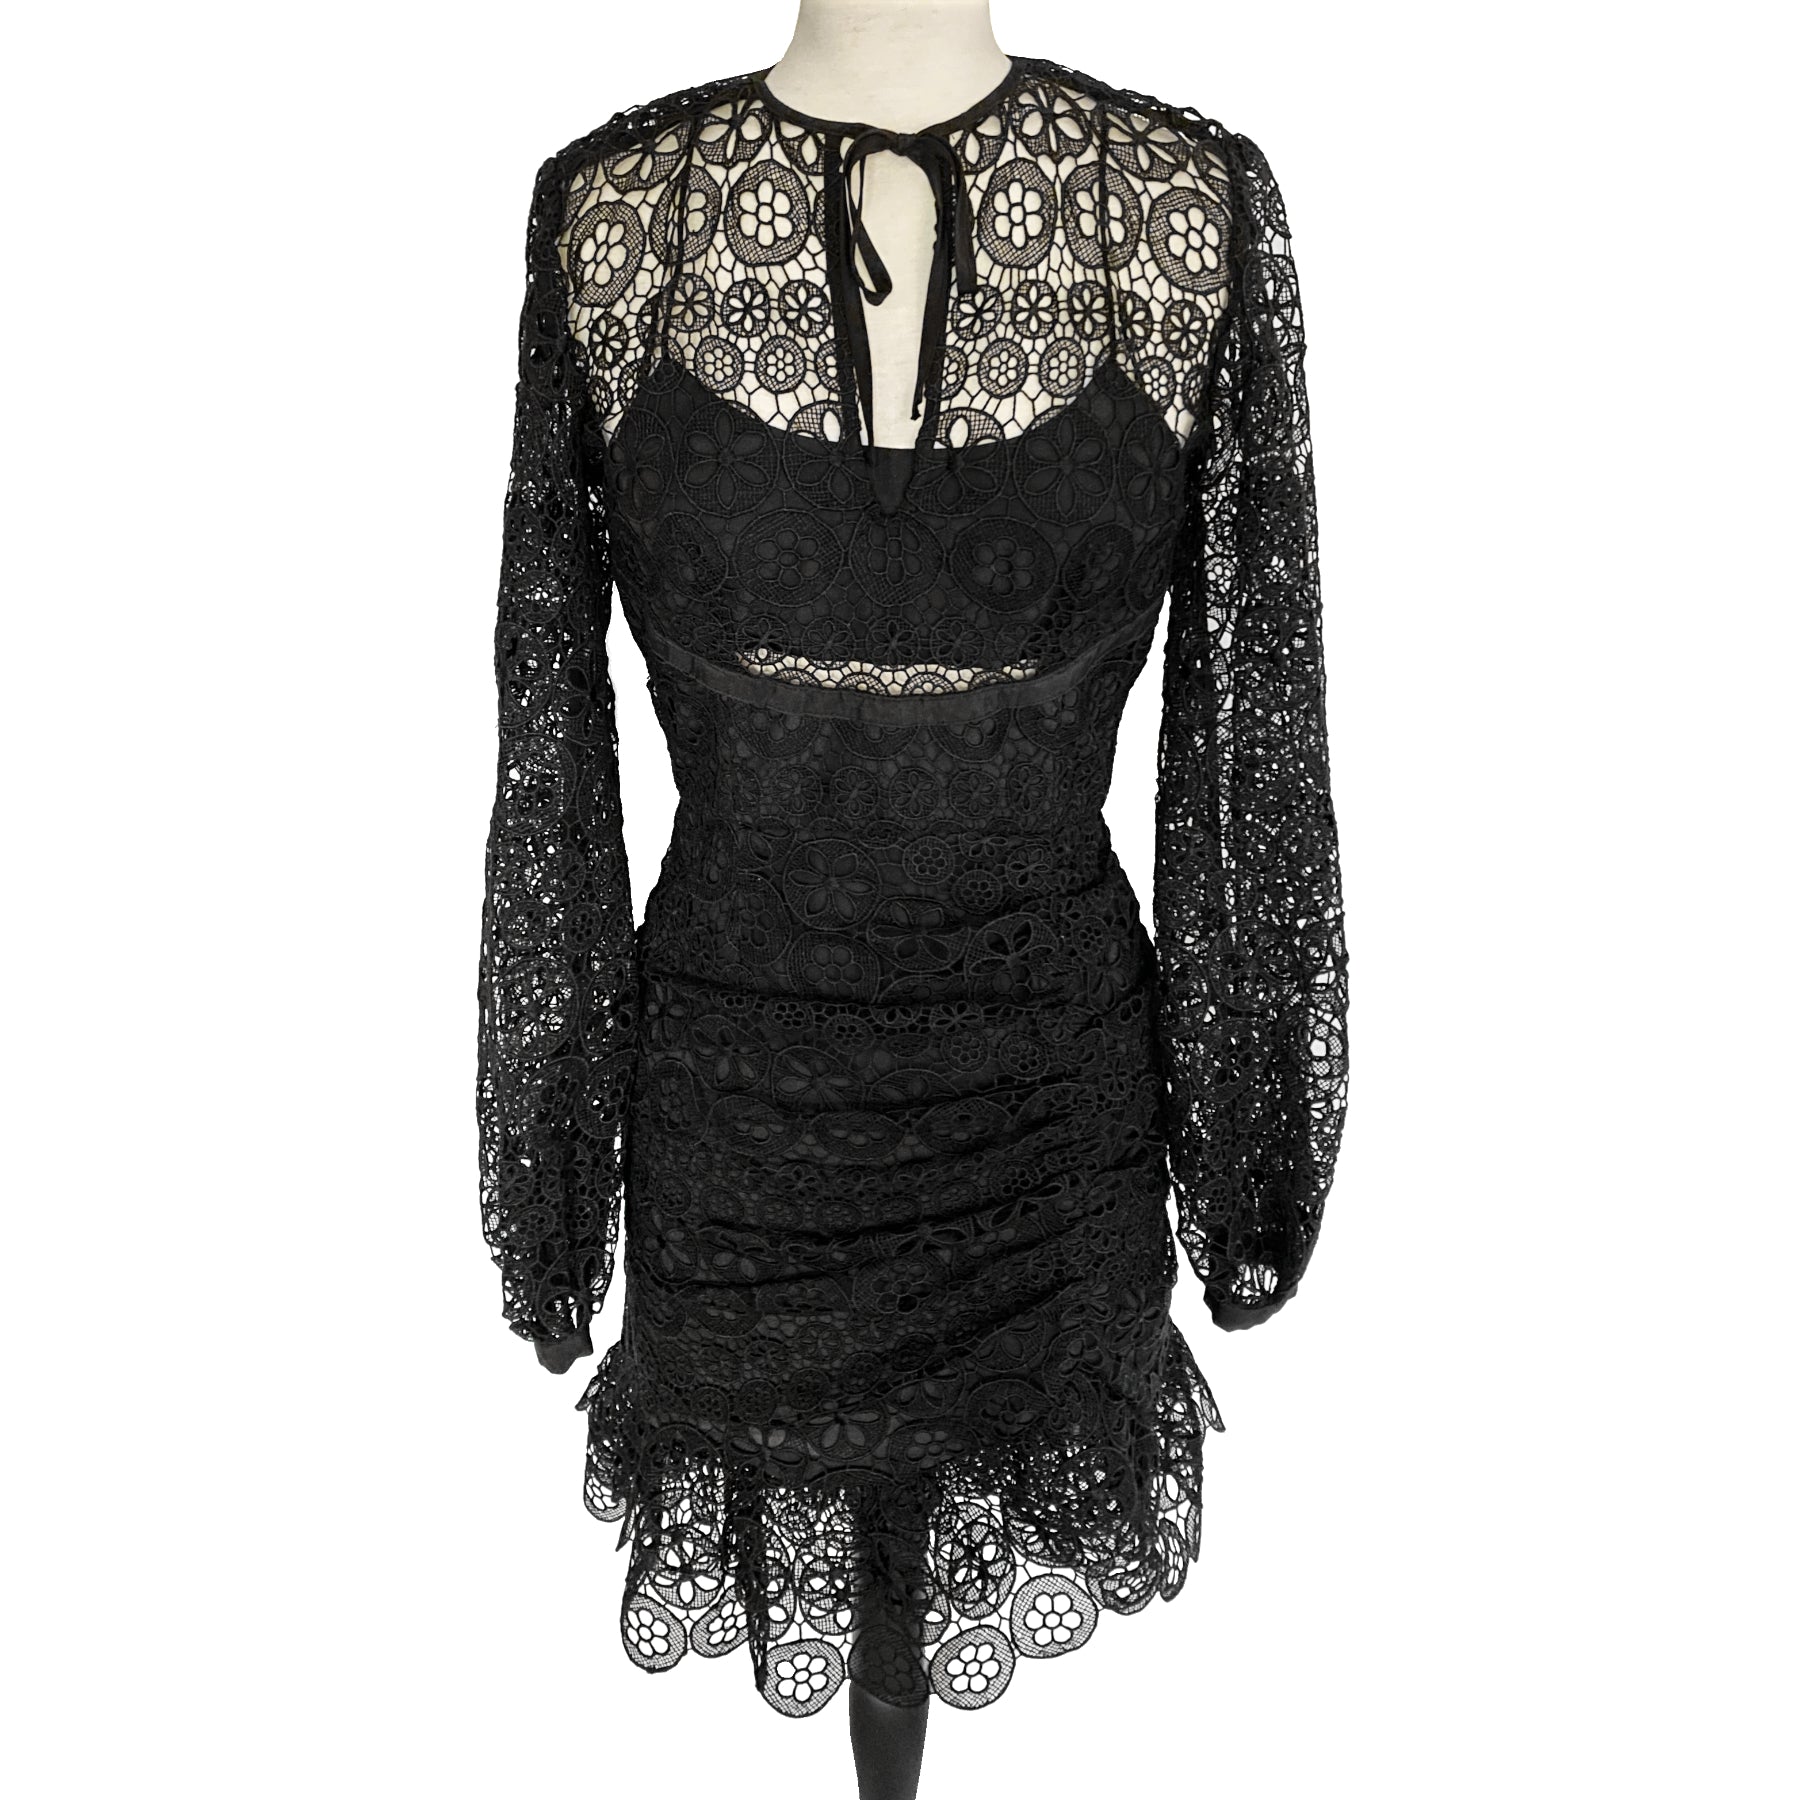 Black floral lace mini-dress